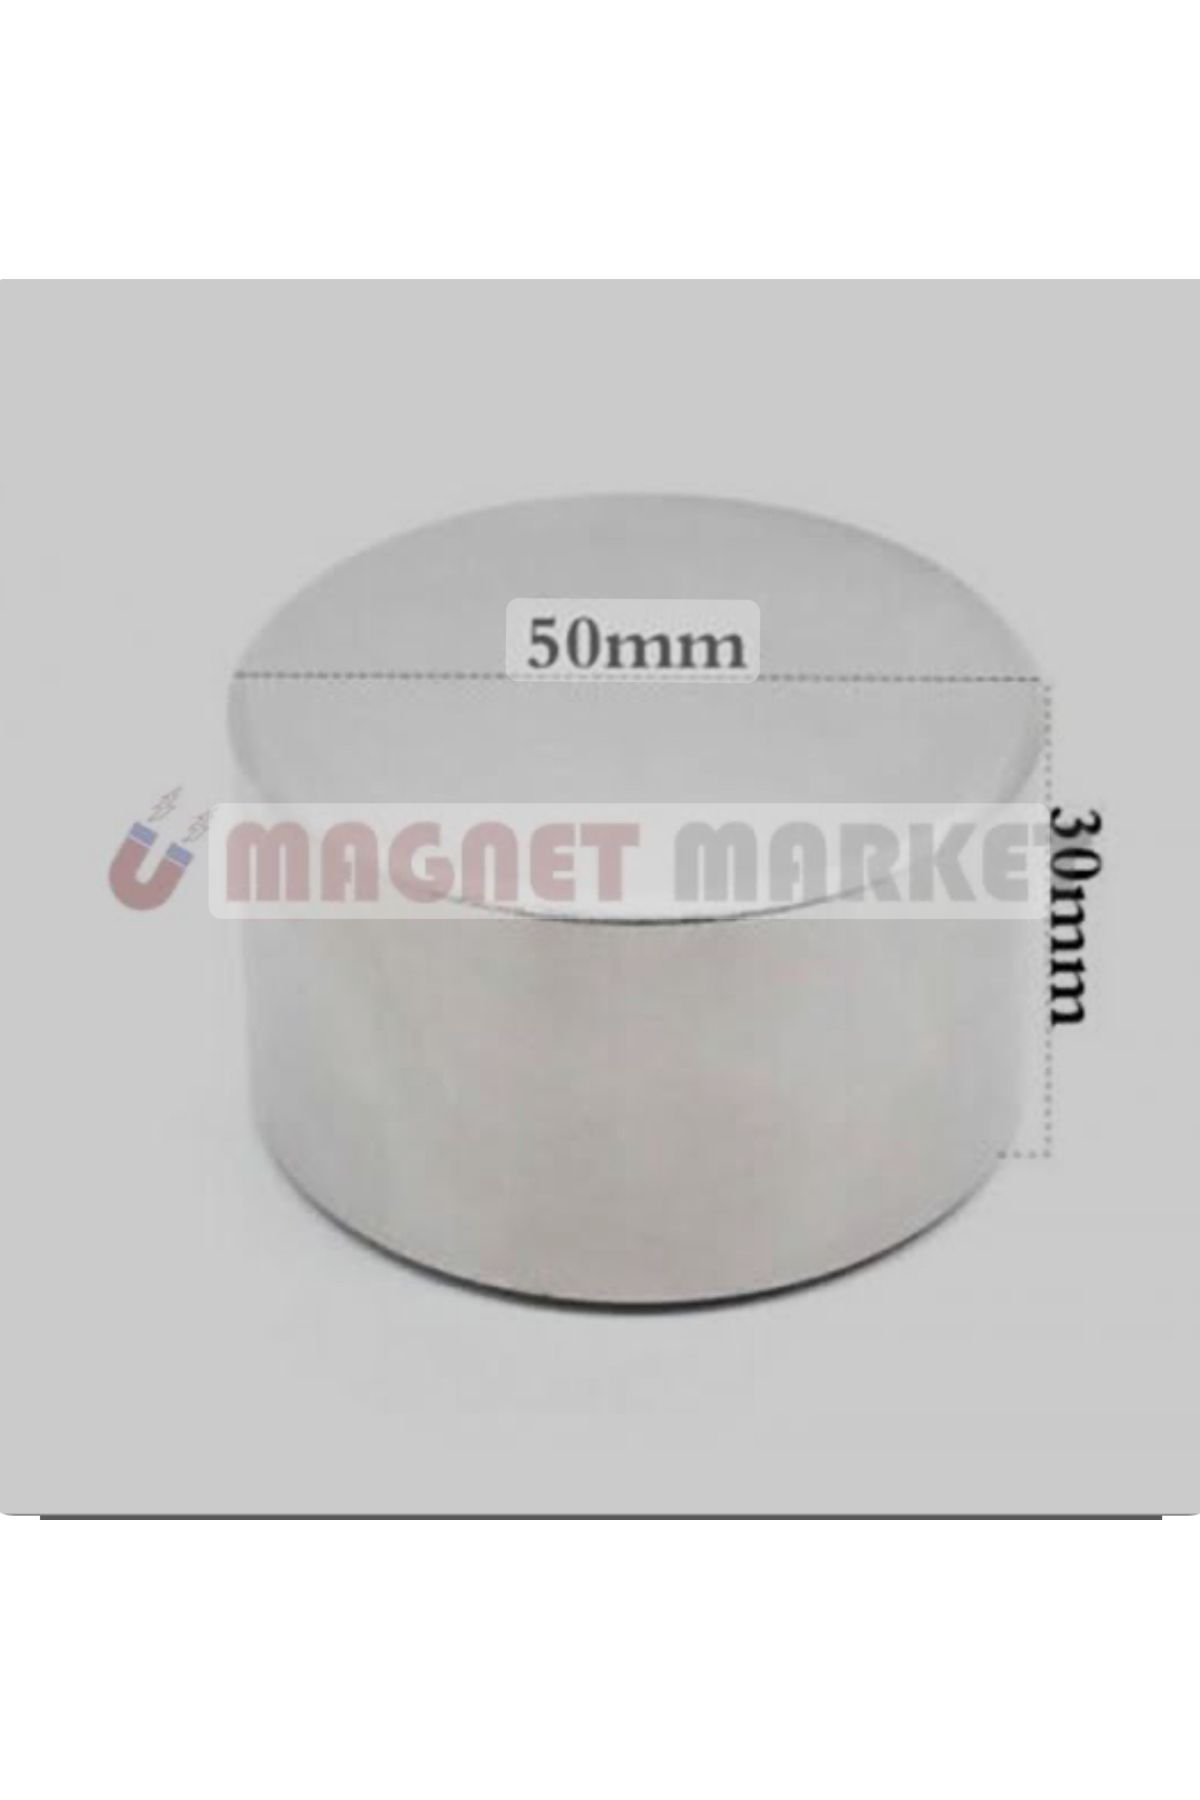 magnet market - 1 Adet 50x30mm - Jumbo Boy- Çap 50mm X Kalınlık 30mm Neodyum Mıknatıs